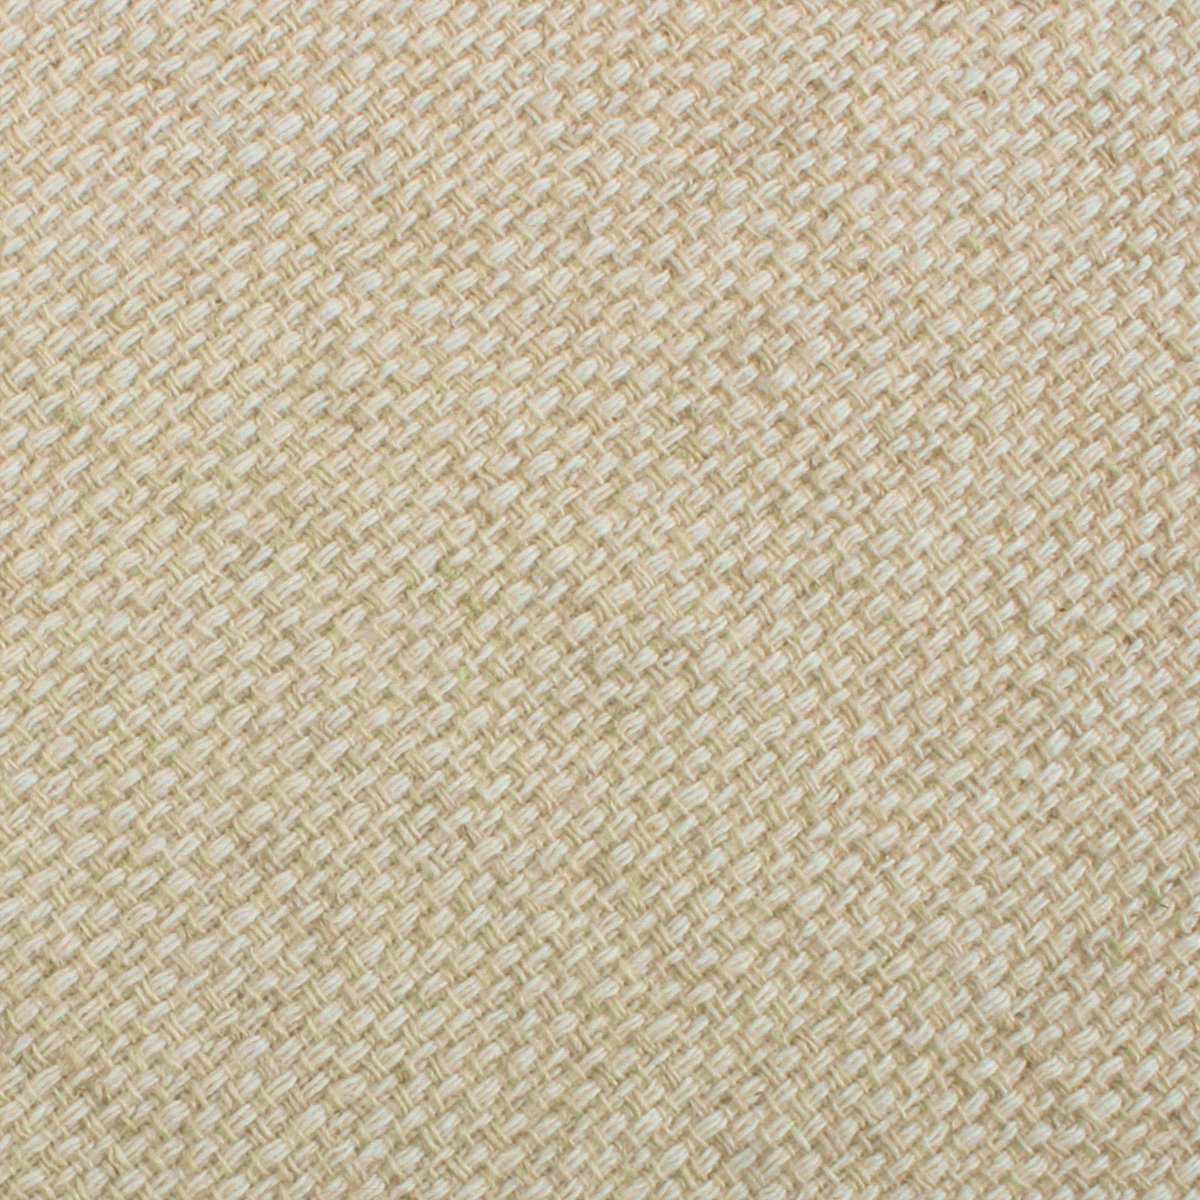 Champagne Basket Weave Linen Necktie Fabric